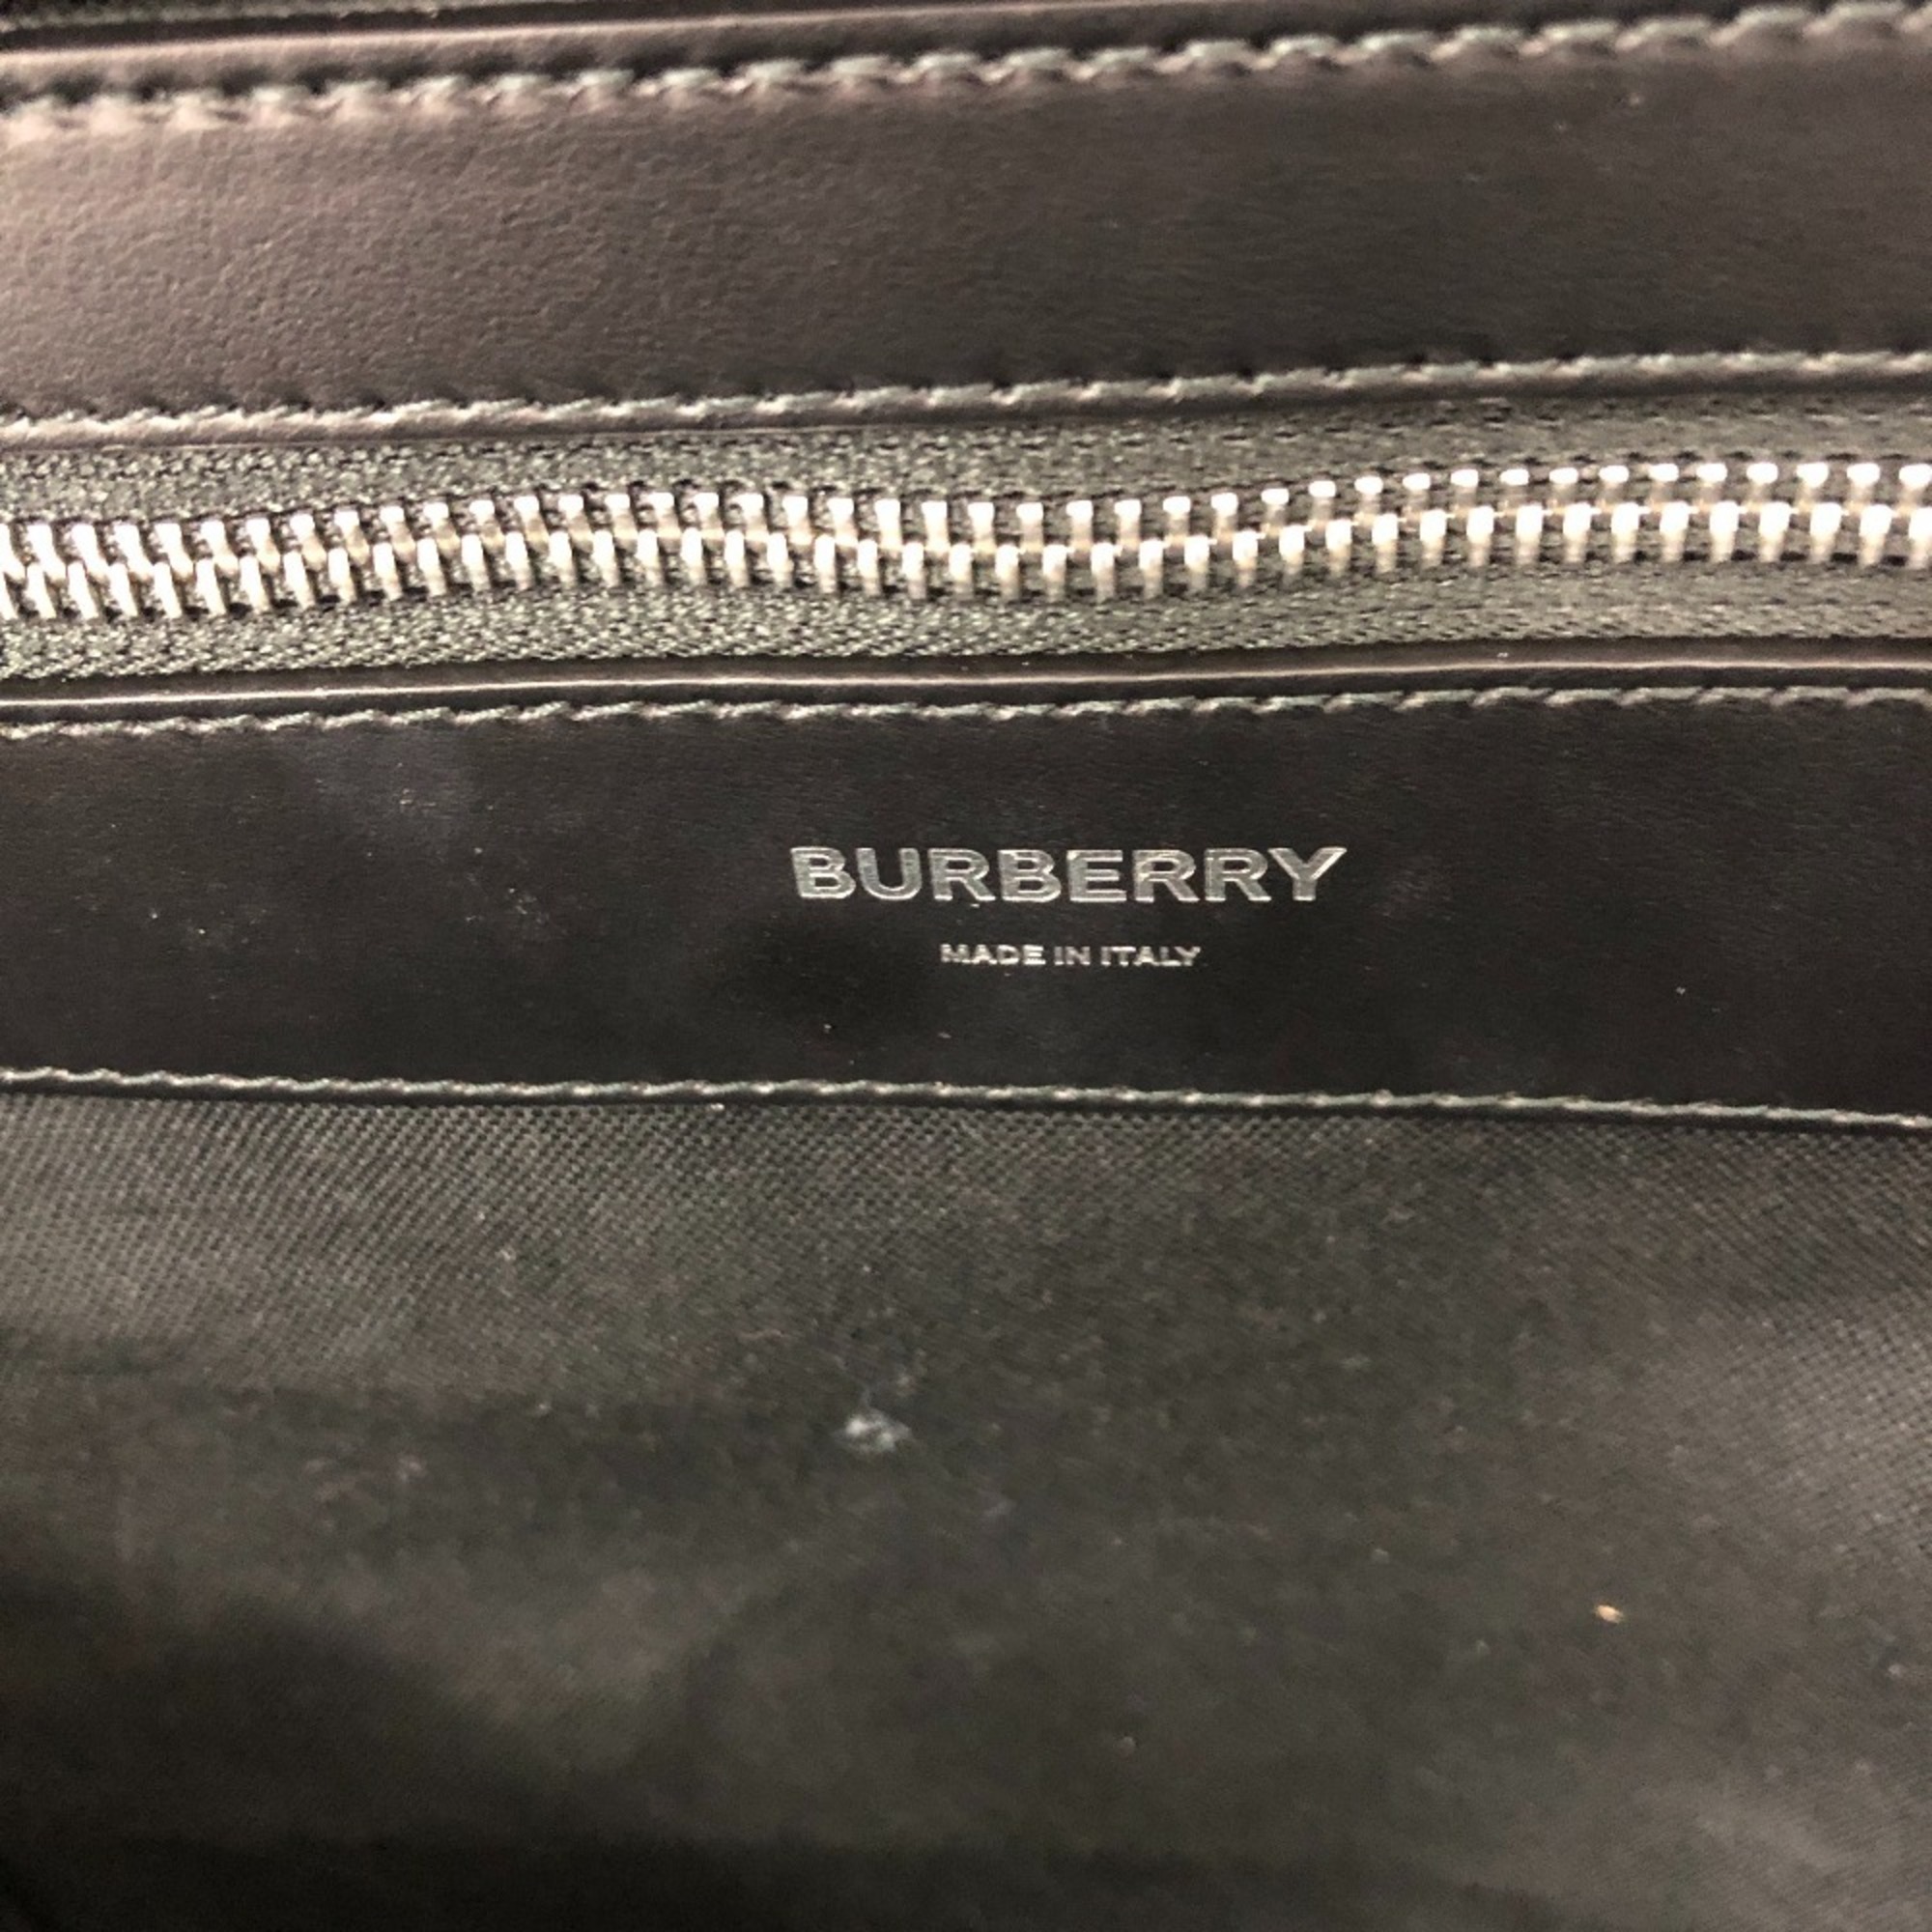 BURBERRY Backpack/Daypack Black Unisex